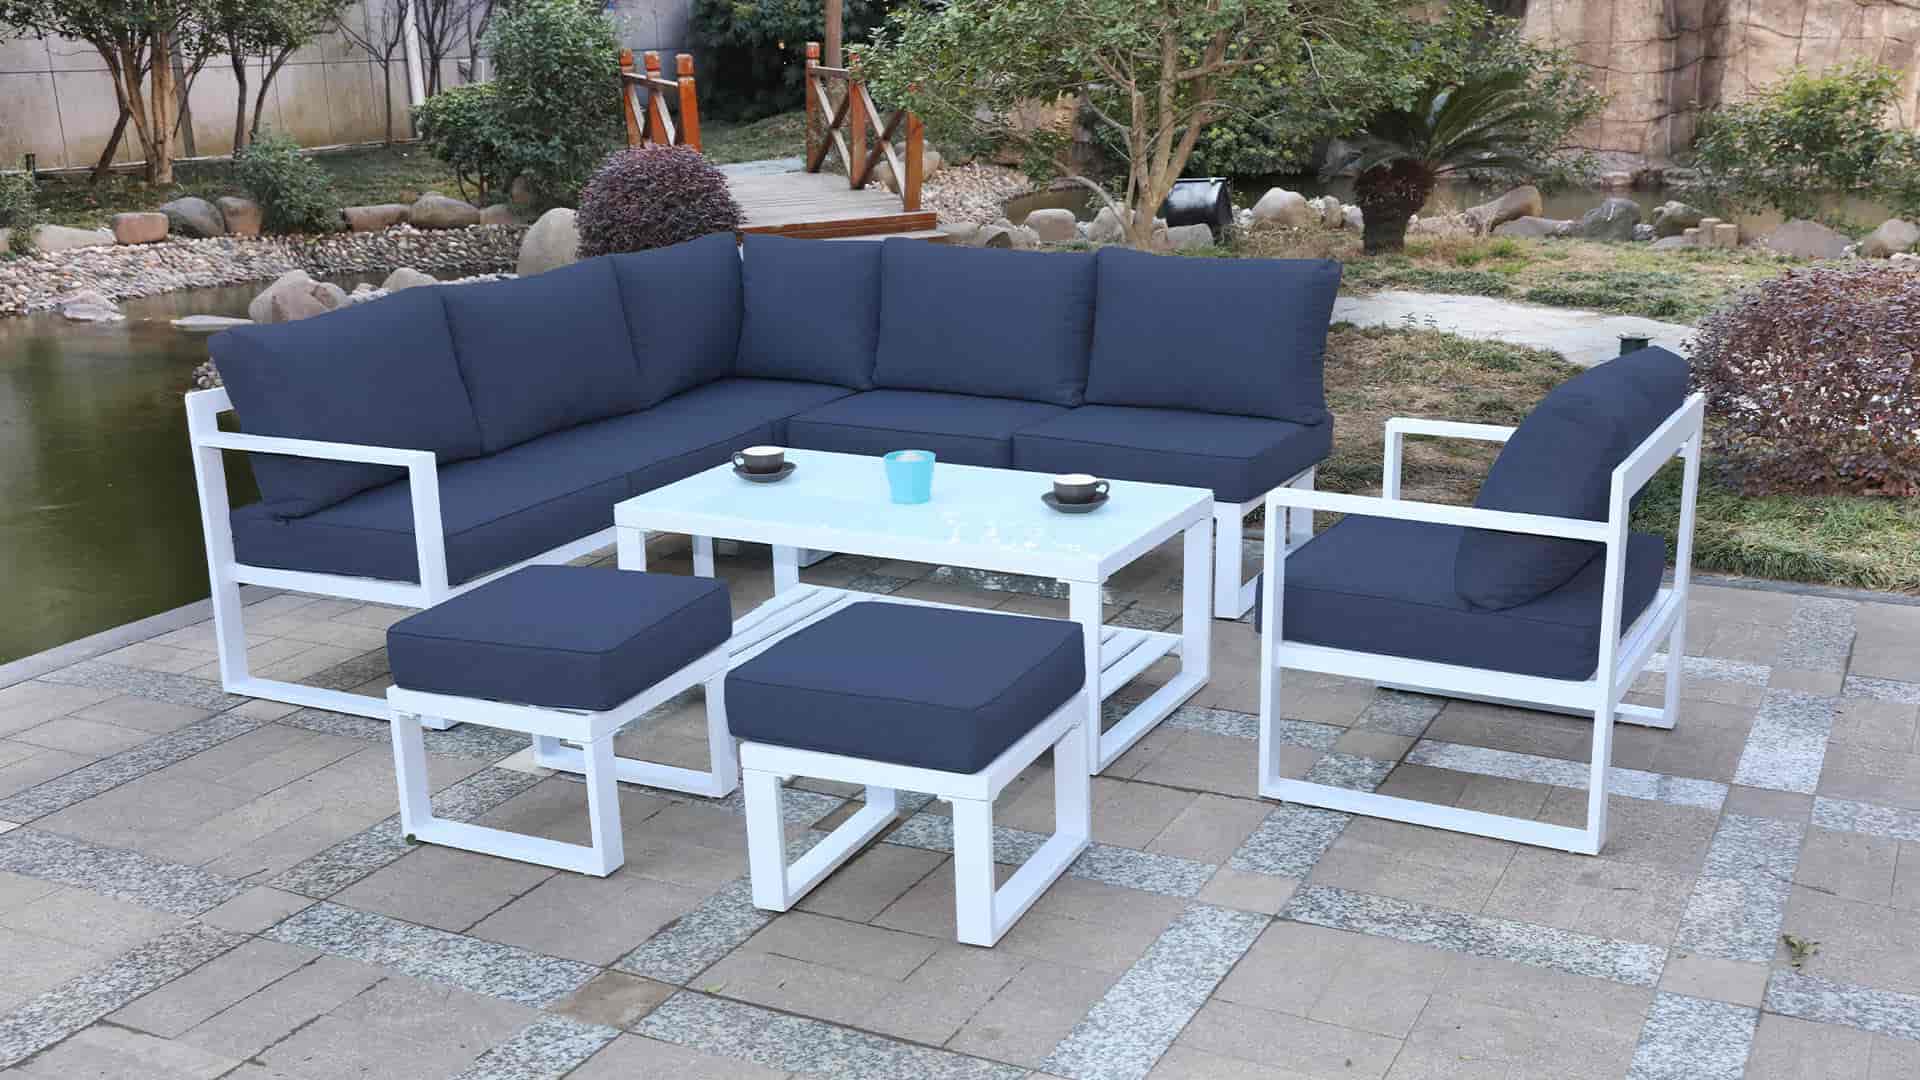 New Garden Furniture - Rattan - Cushions - Garden - Outdoors - Comfort - Summer - Outdoor - Aluminium - Steptoes - Furniture - Paphos - Cyprus 1